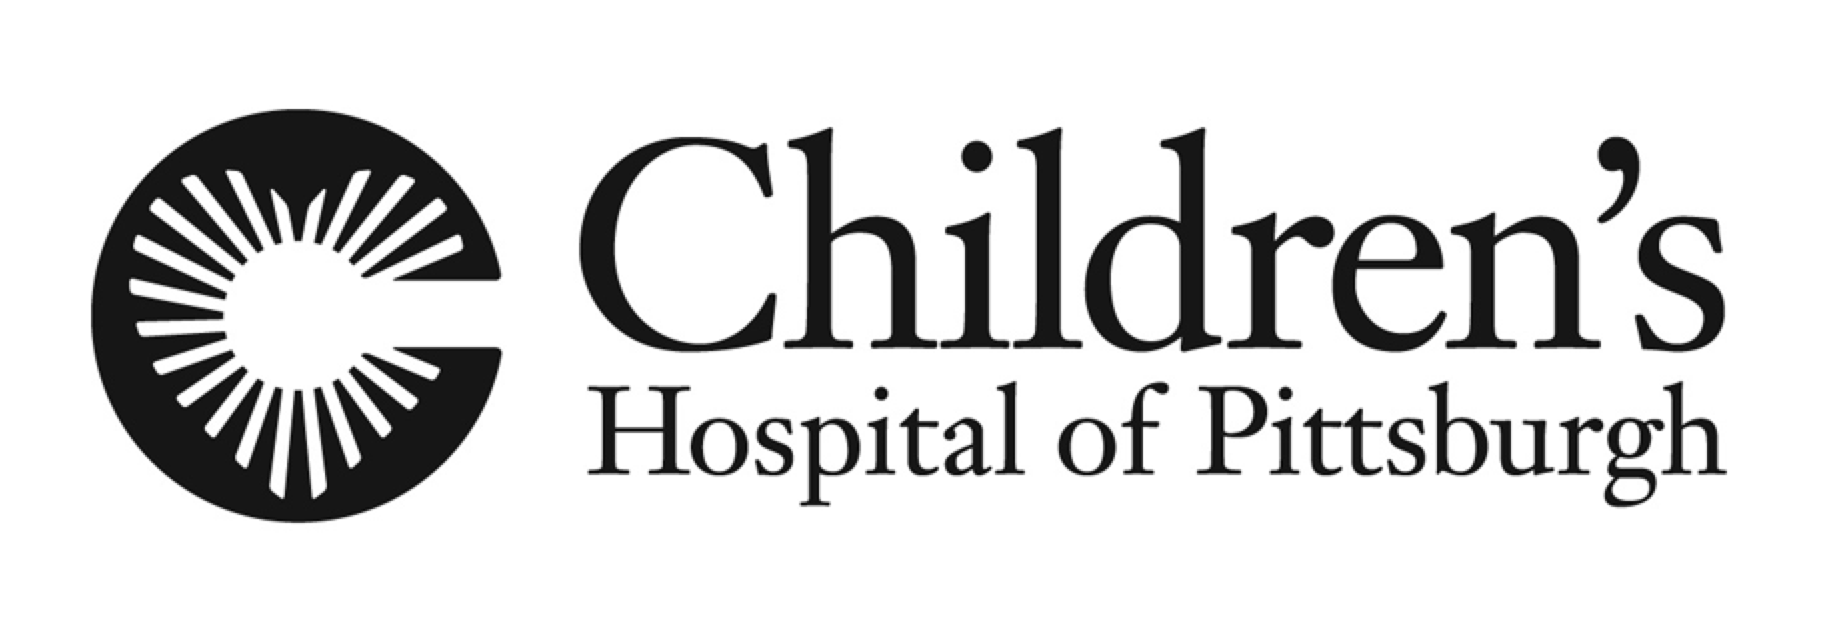 Children's Hospital of Pittsburg